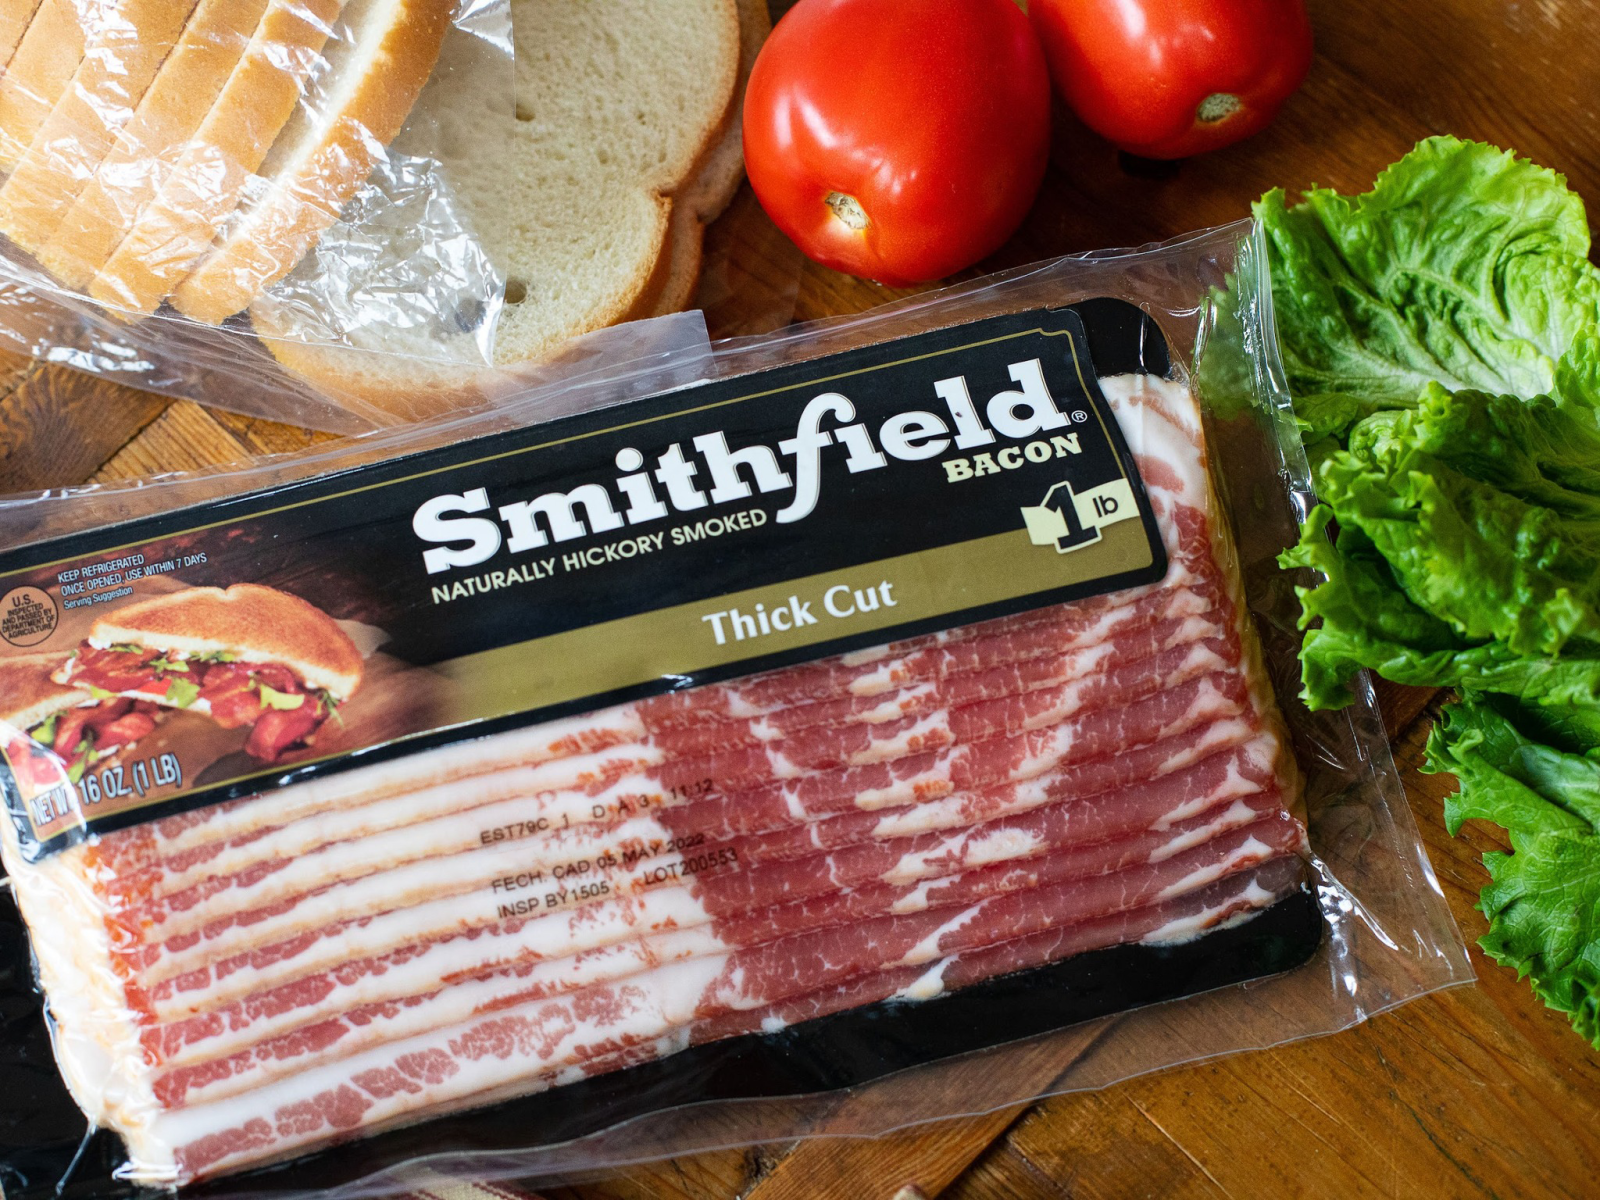 Smithfield Bacon Only $4.49 At Kroger (Regular Price $7.49)